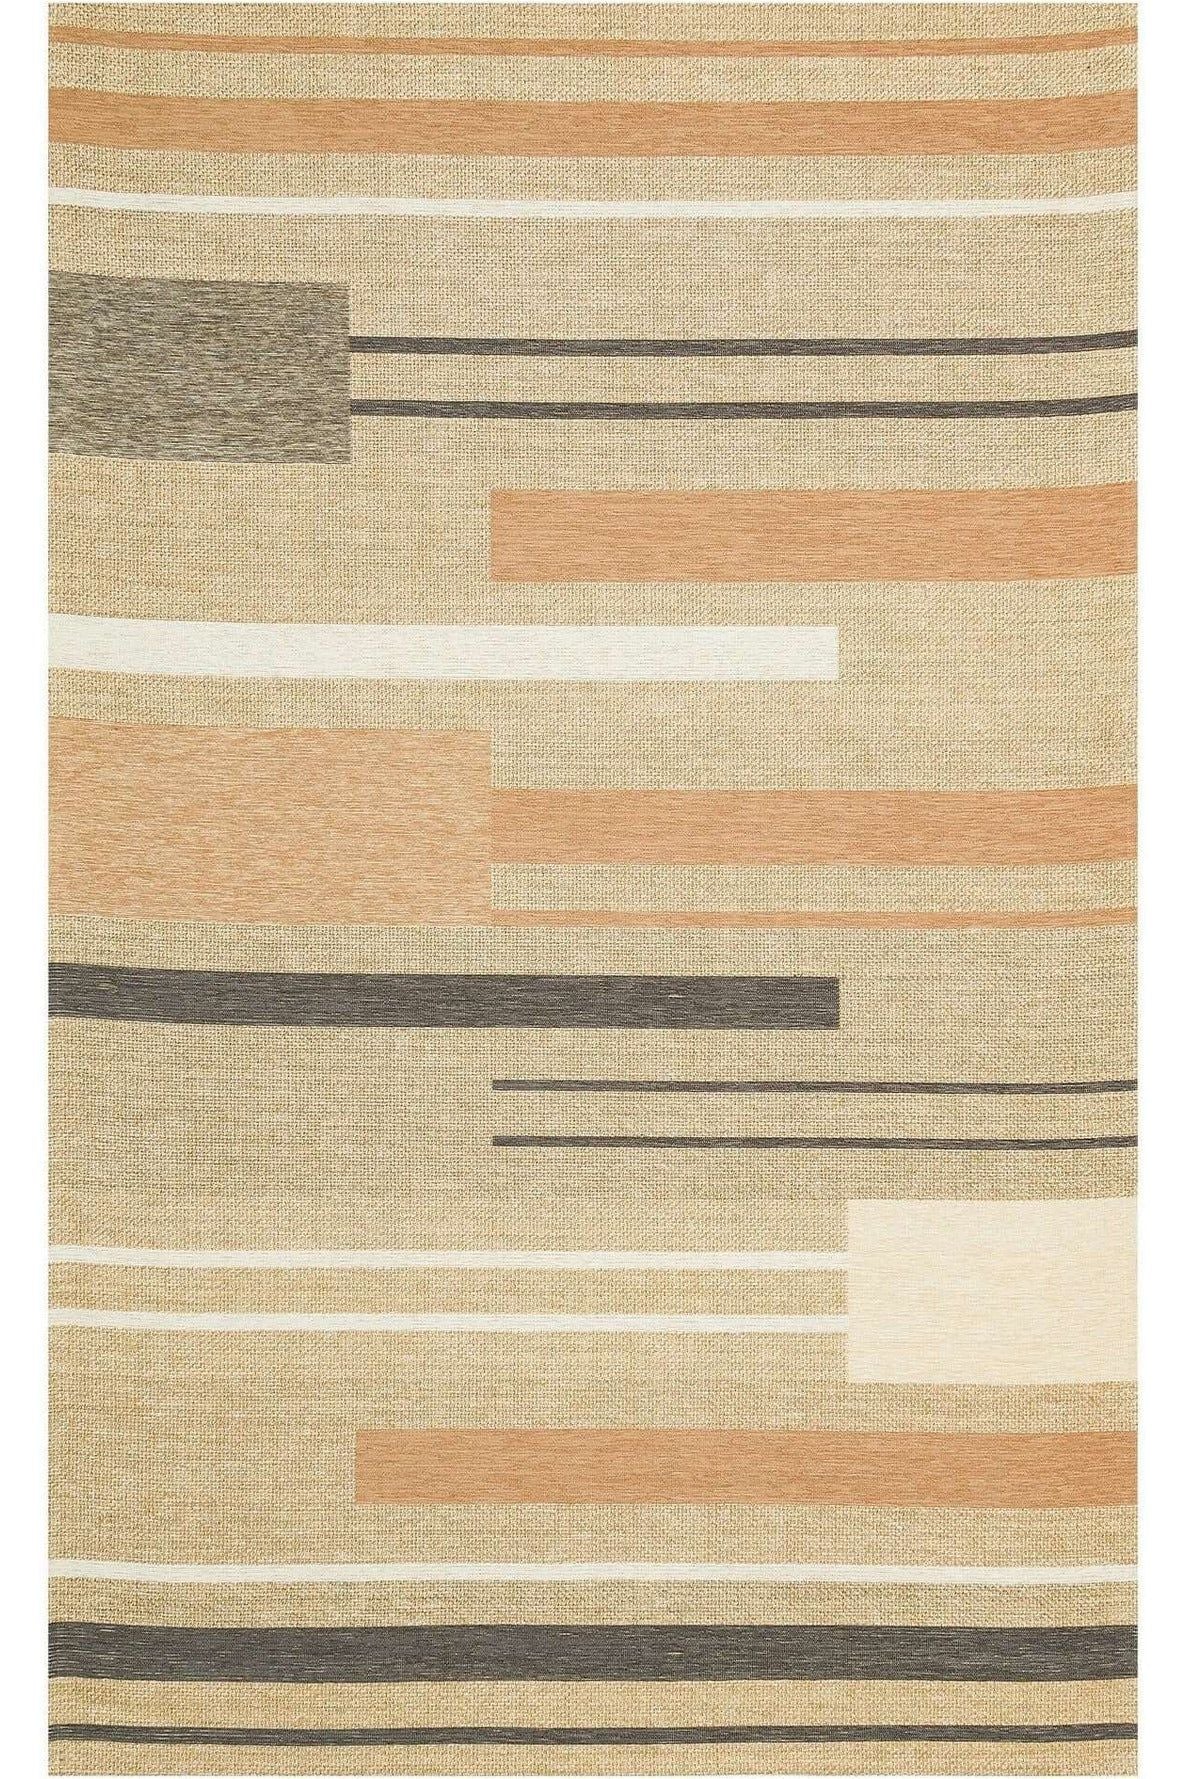 #Turkish_Carpets_Rugs# #Modern_Carpets# #Abrash_Carpets#Brk 06 Natural Terra